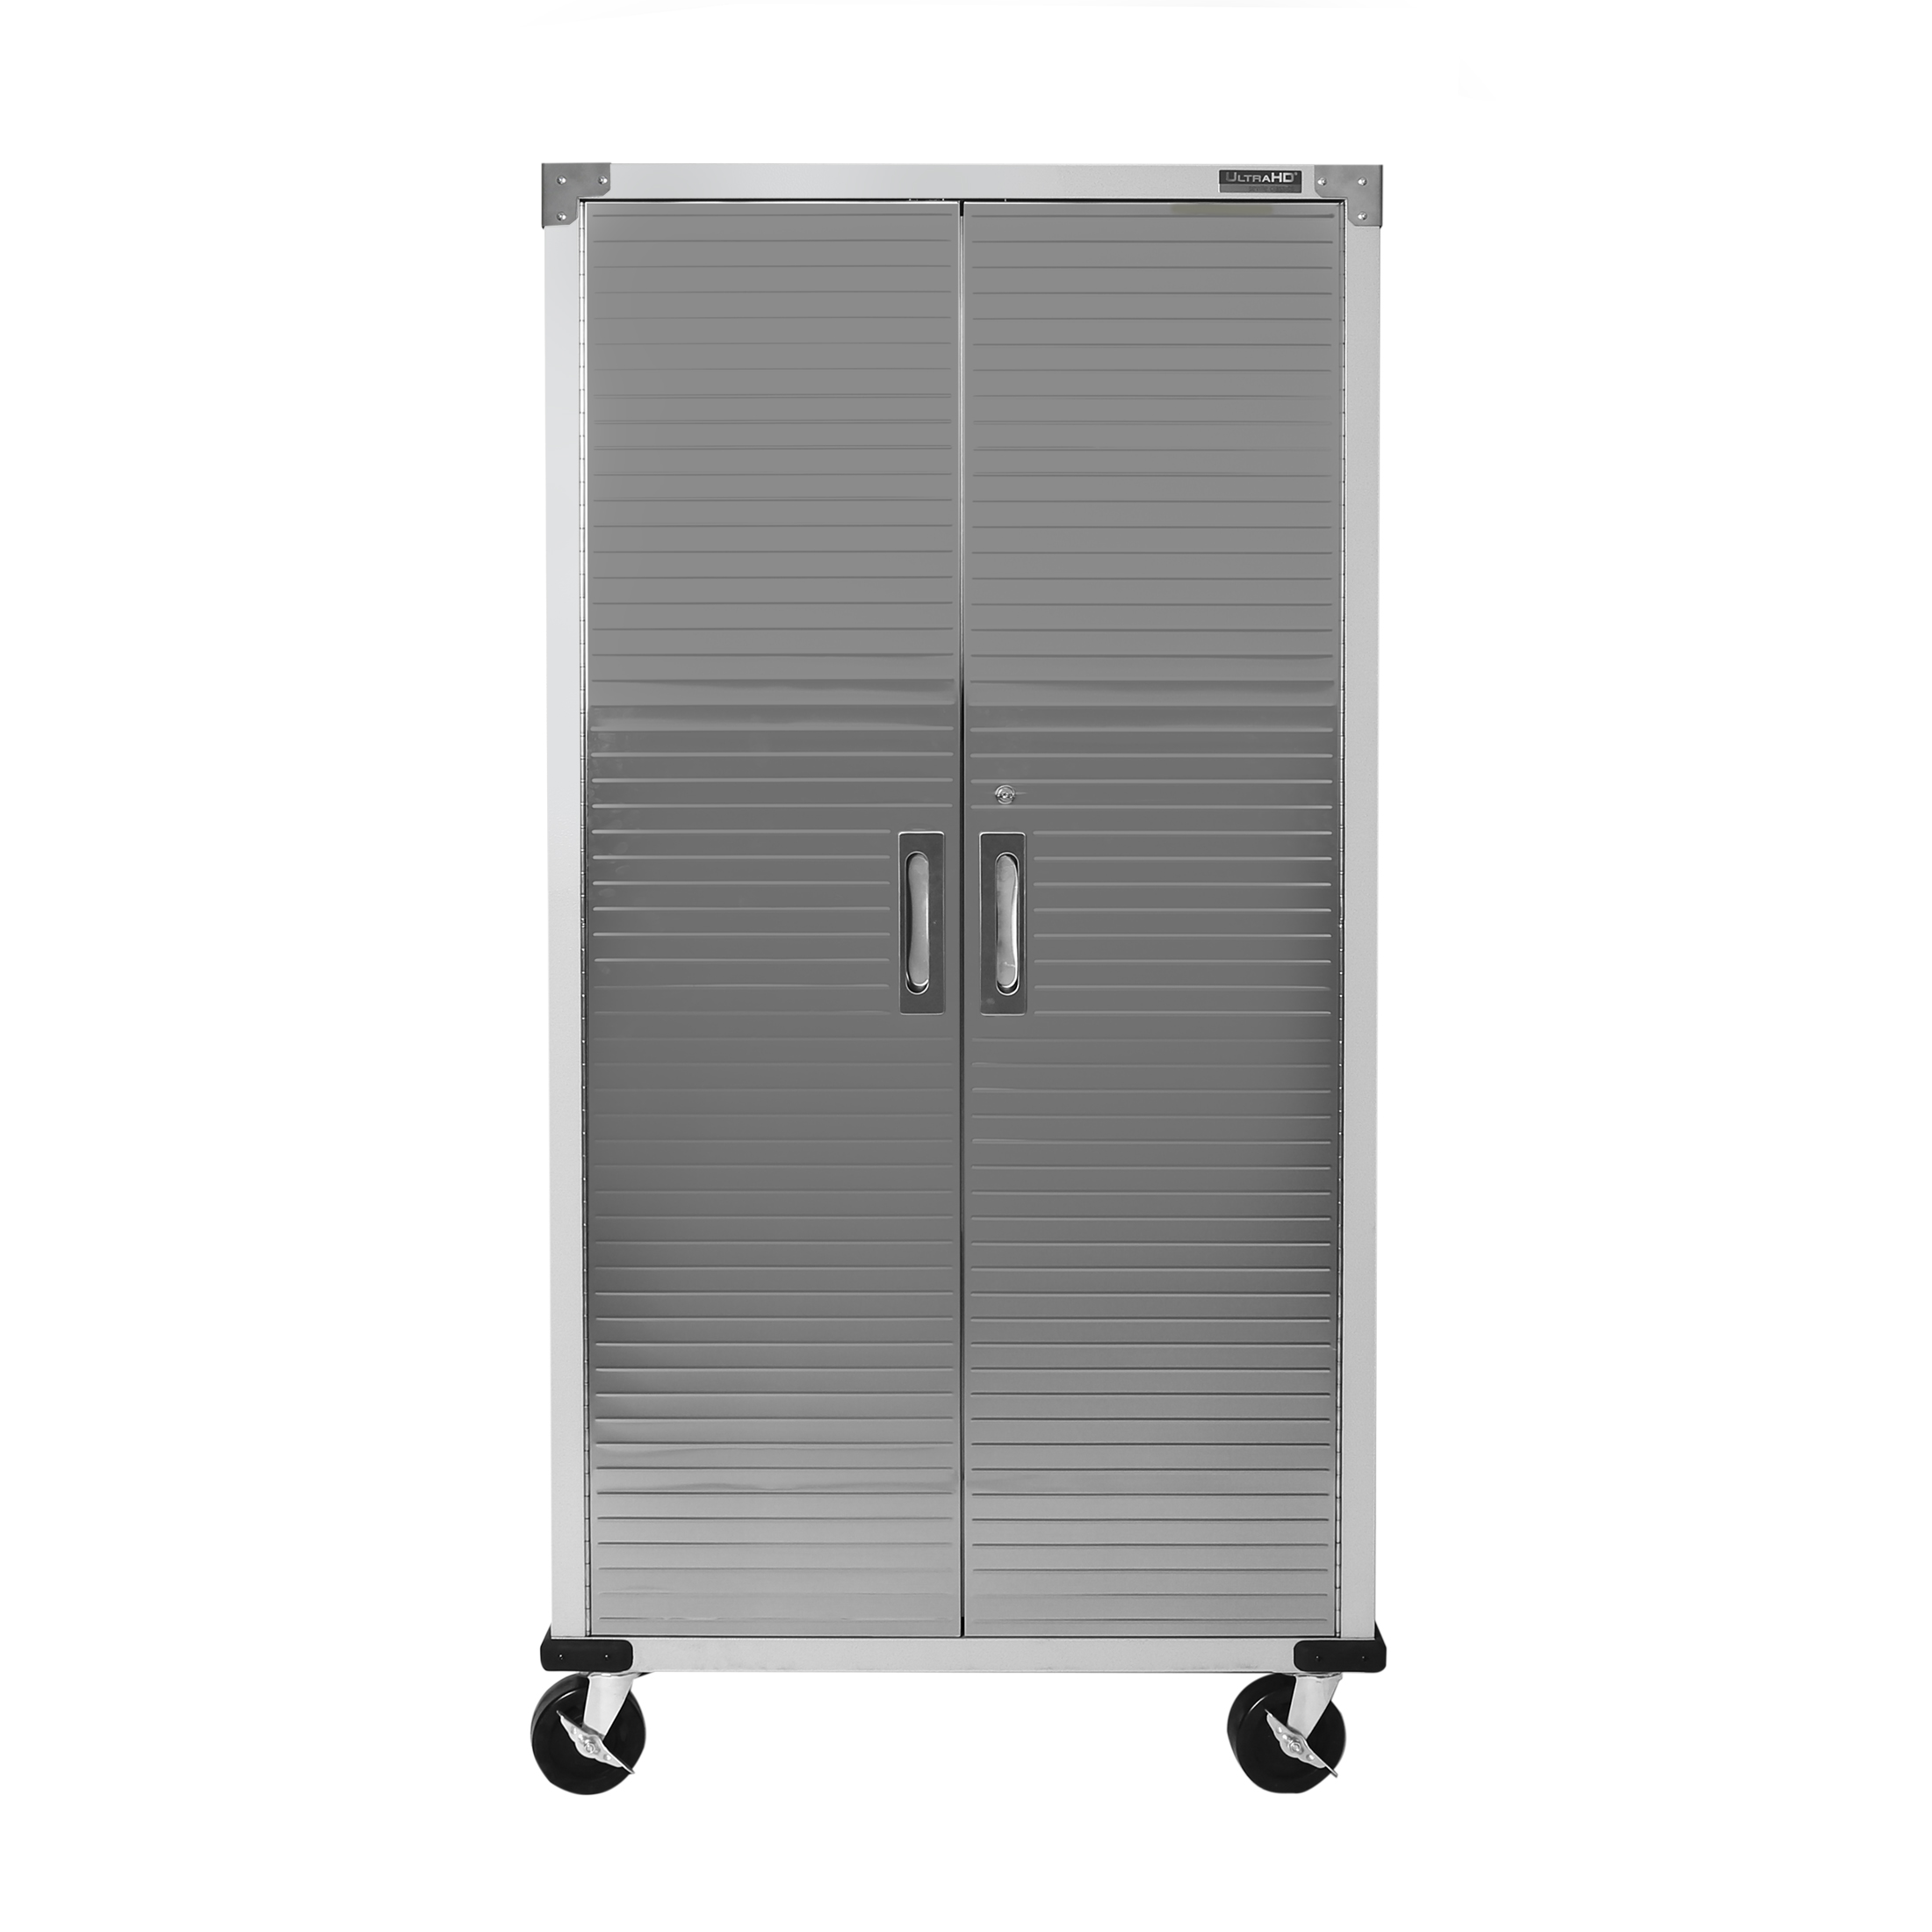 Seville Classics UltraHD Steel Body Lockable Storage Filing Cabinet Organizer Locker Shelving Unit 36" W x 18" D x 72" H, Granite Gray - image 1 of 12